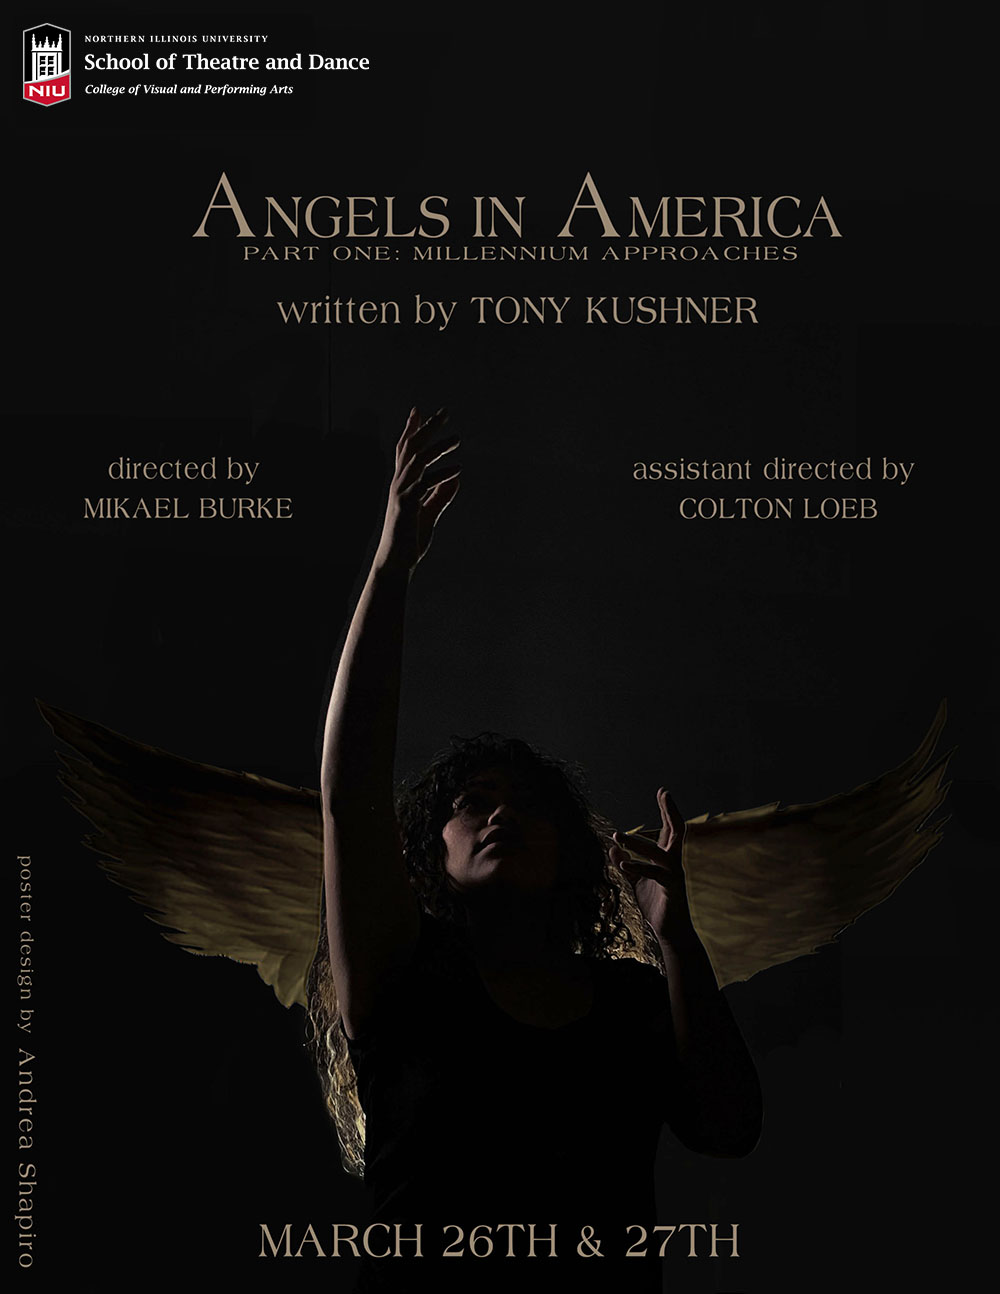 Angels in America